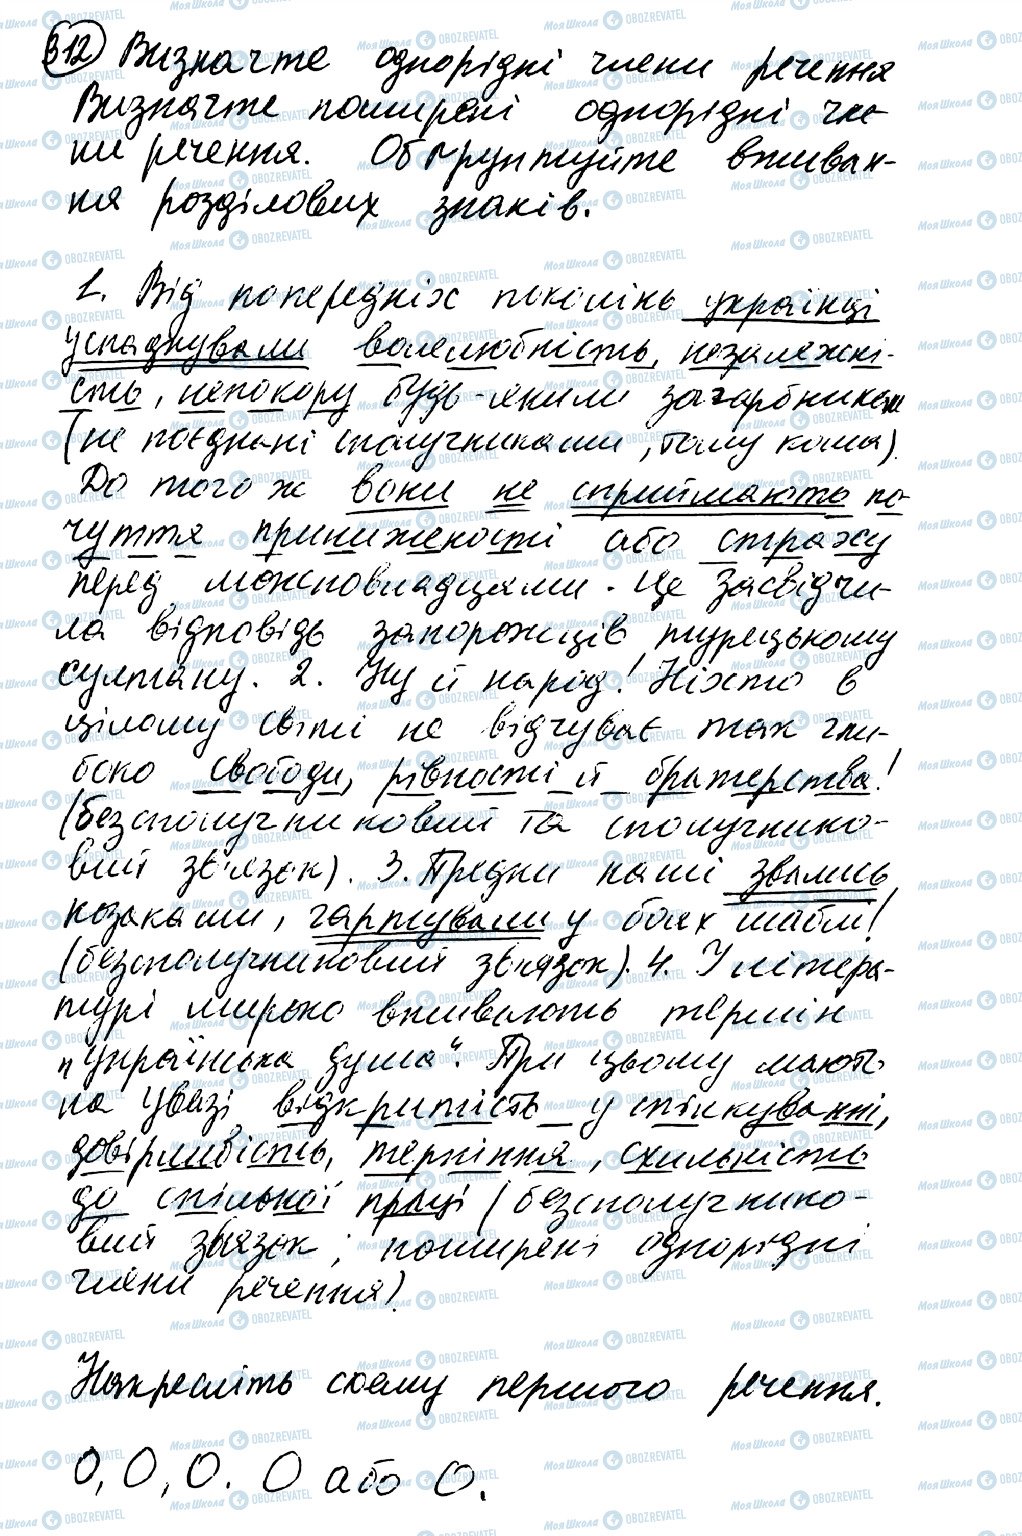 ГДЗ Укр мова 8 класс страница 312